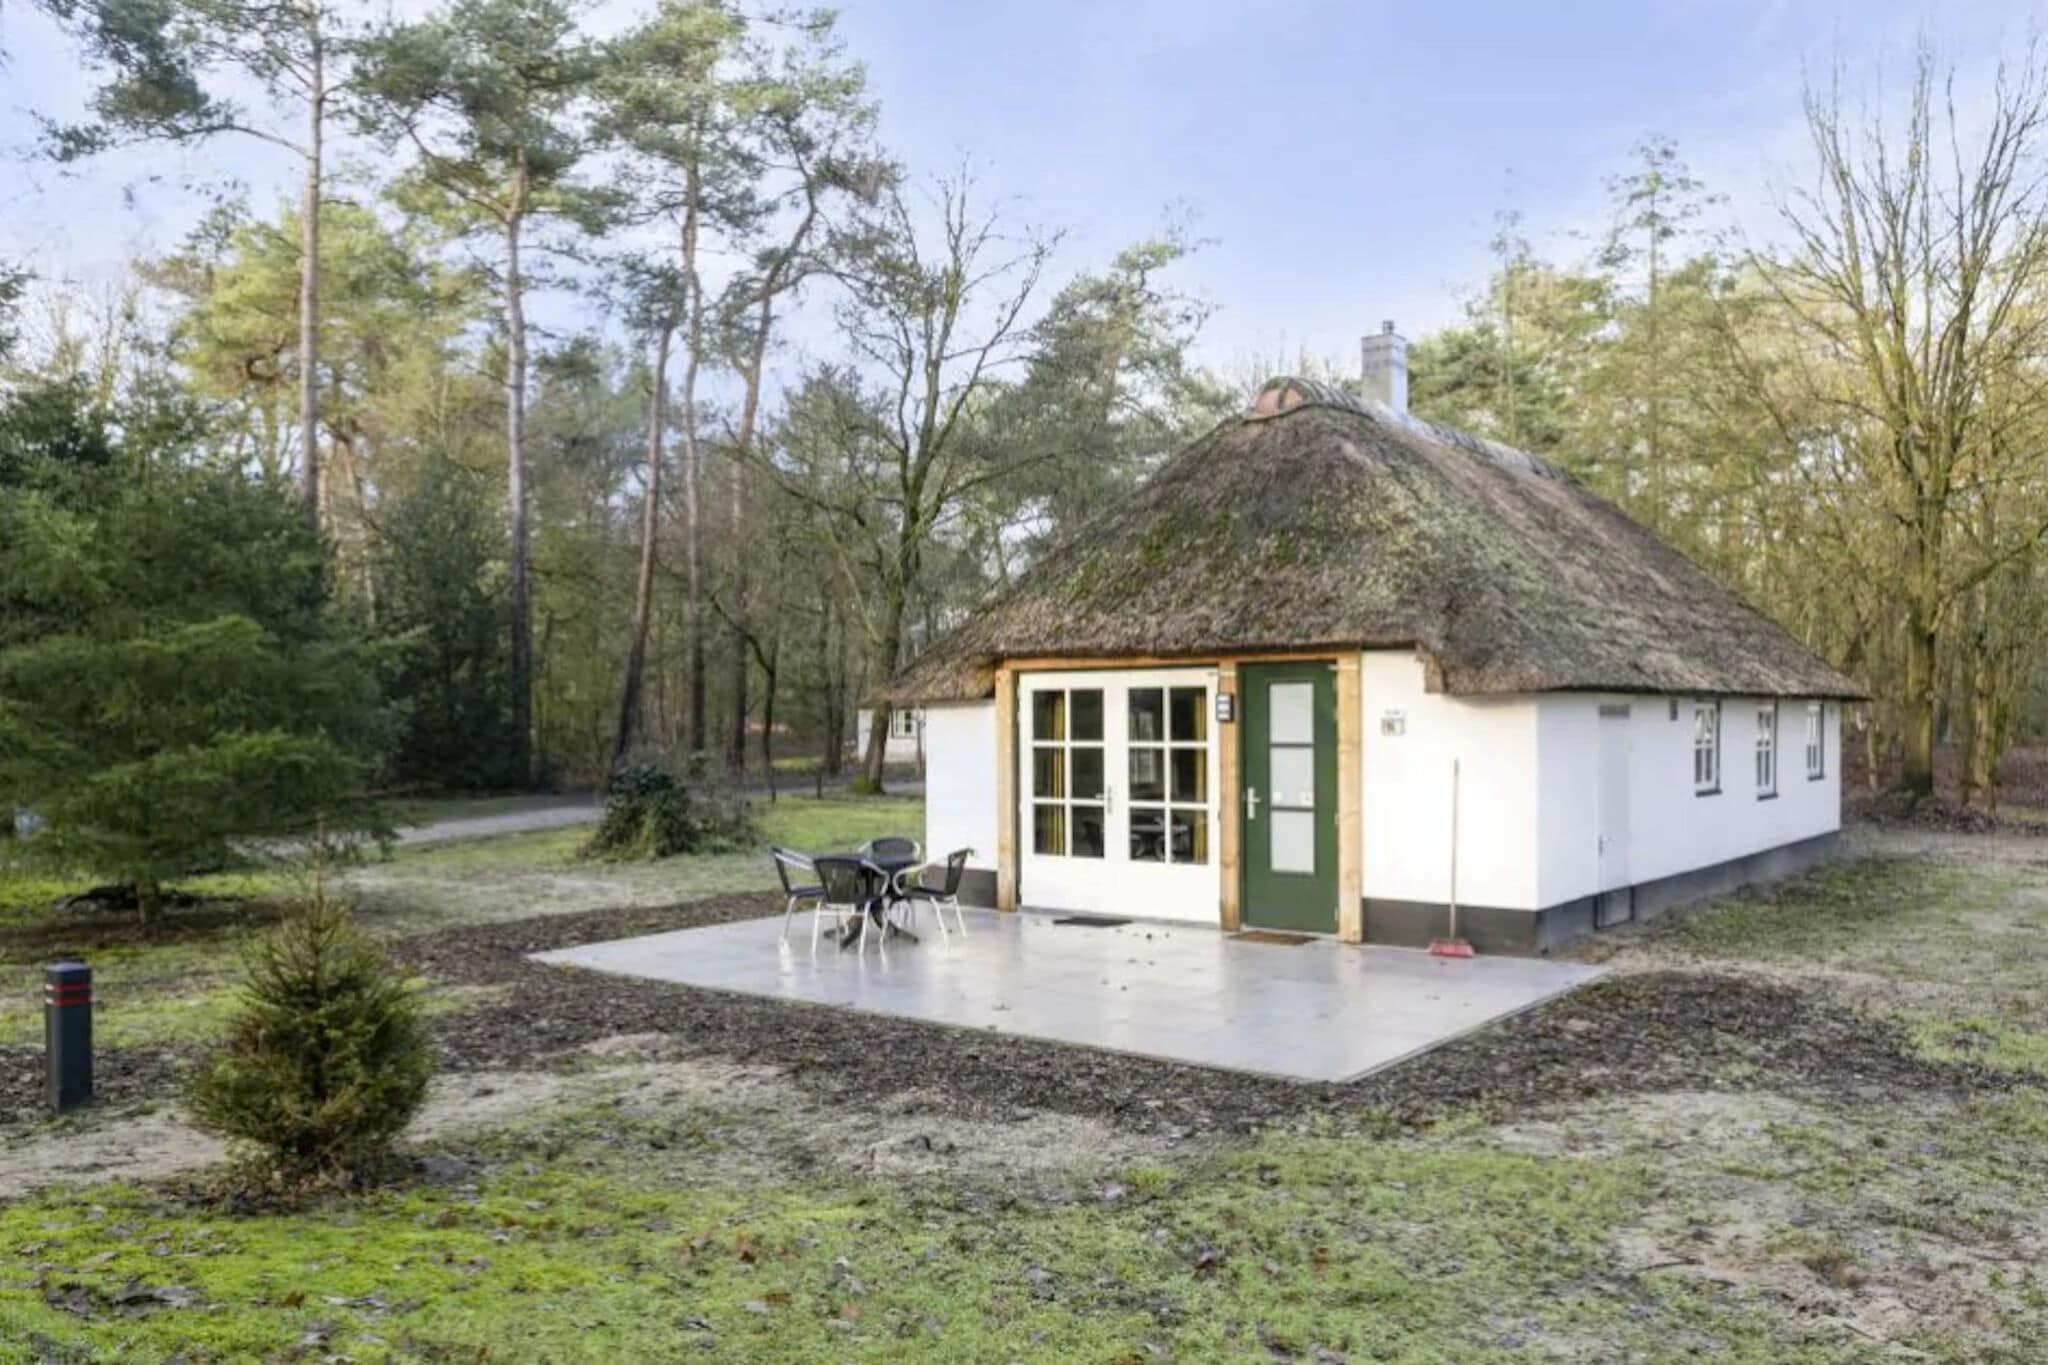 Gezellige bungalow met twee badkamers, in het bos